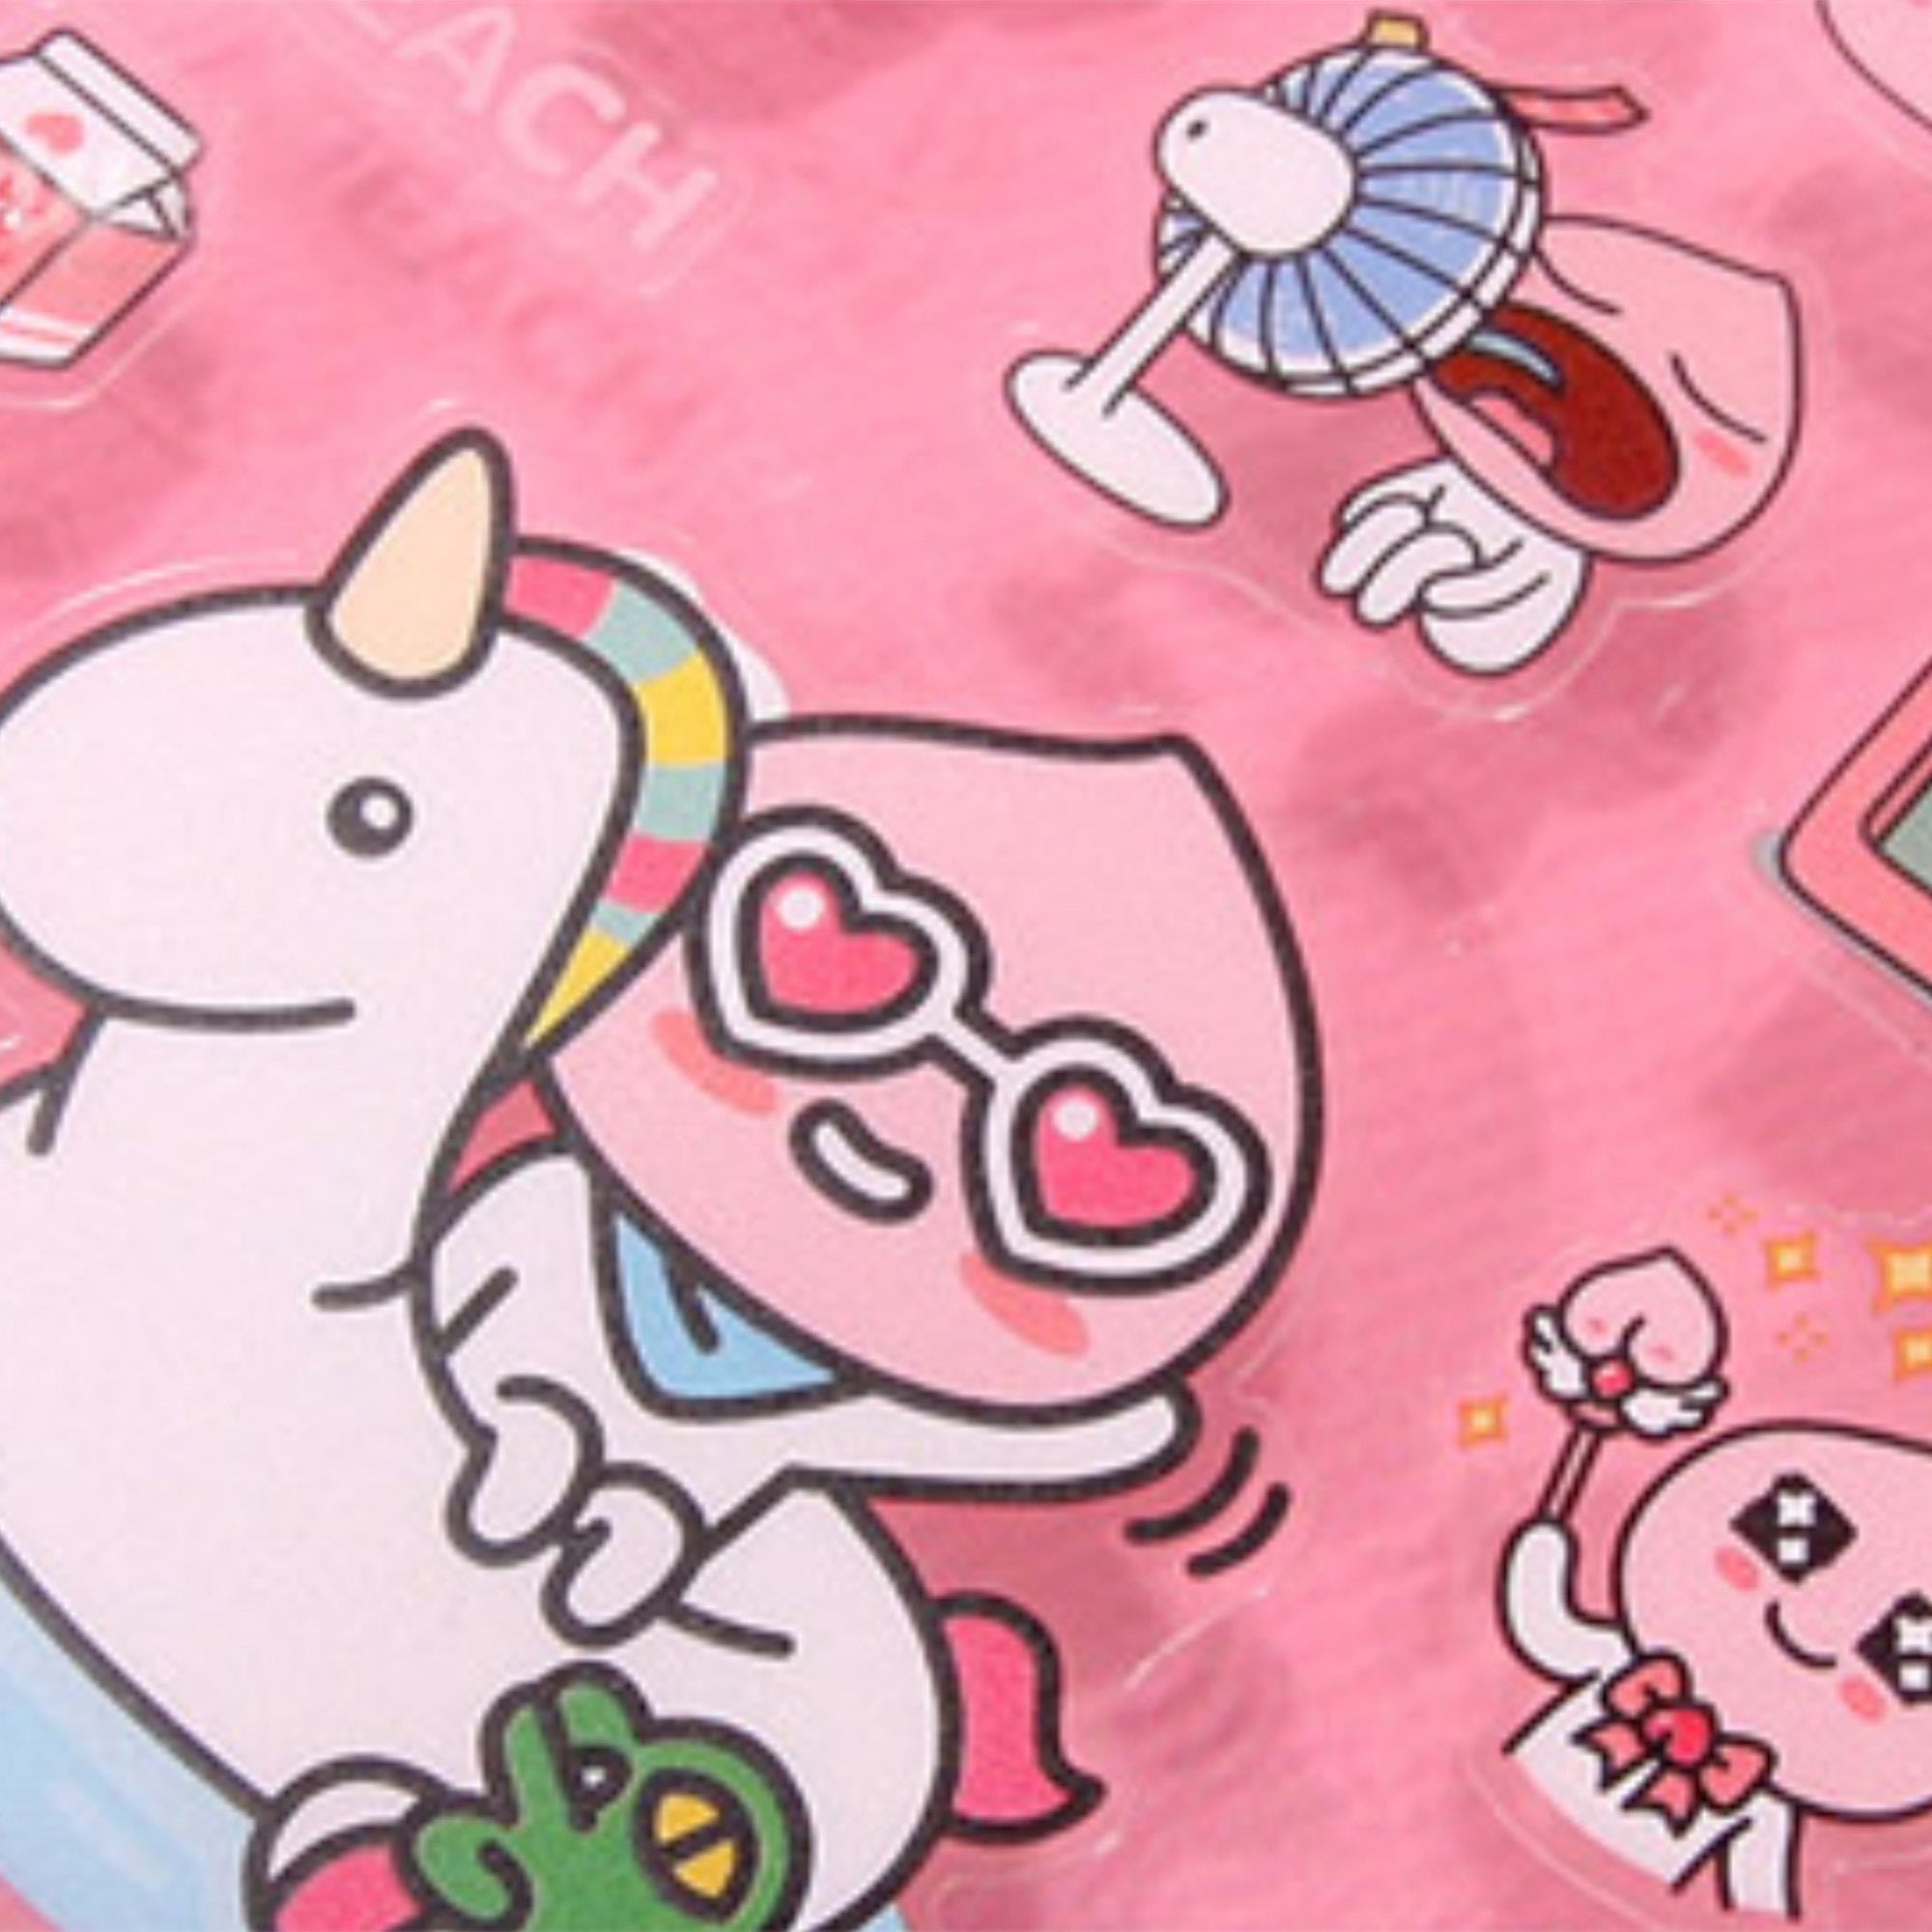 KAKAO FRIENDS Cute Character Clear Sticker Pack for Kids - SkoopMarket